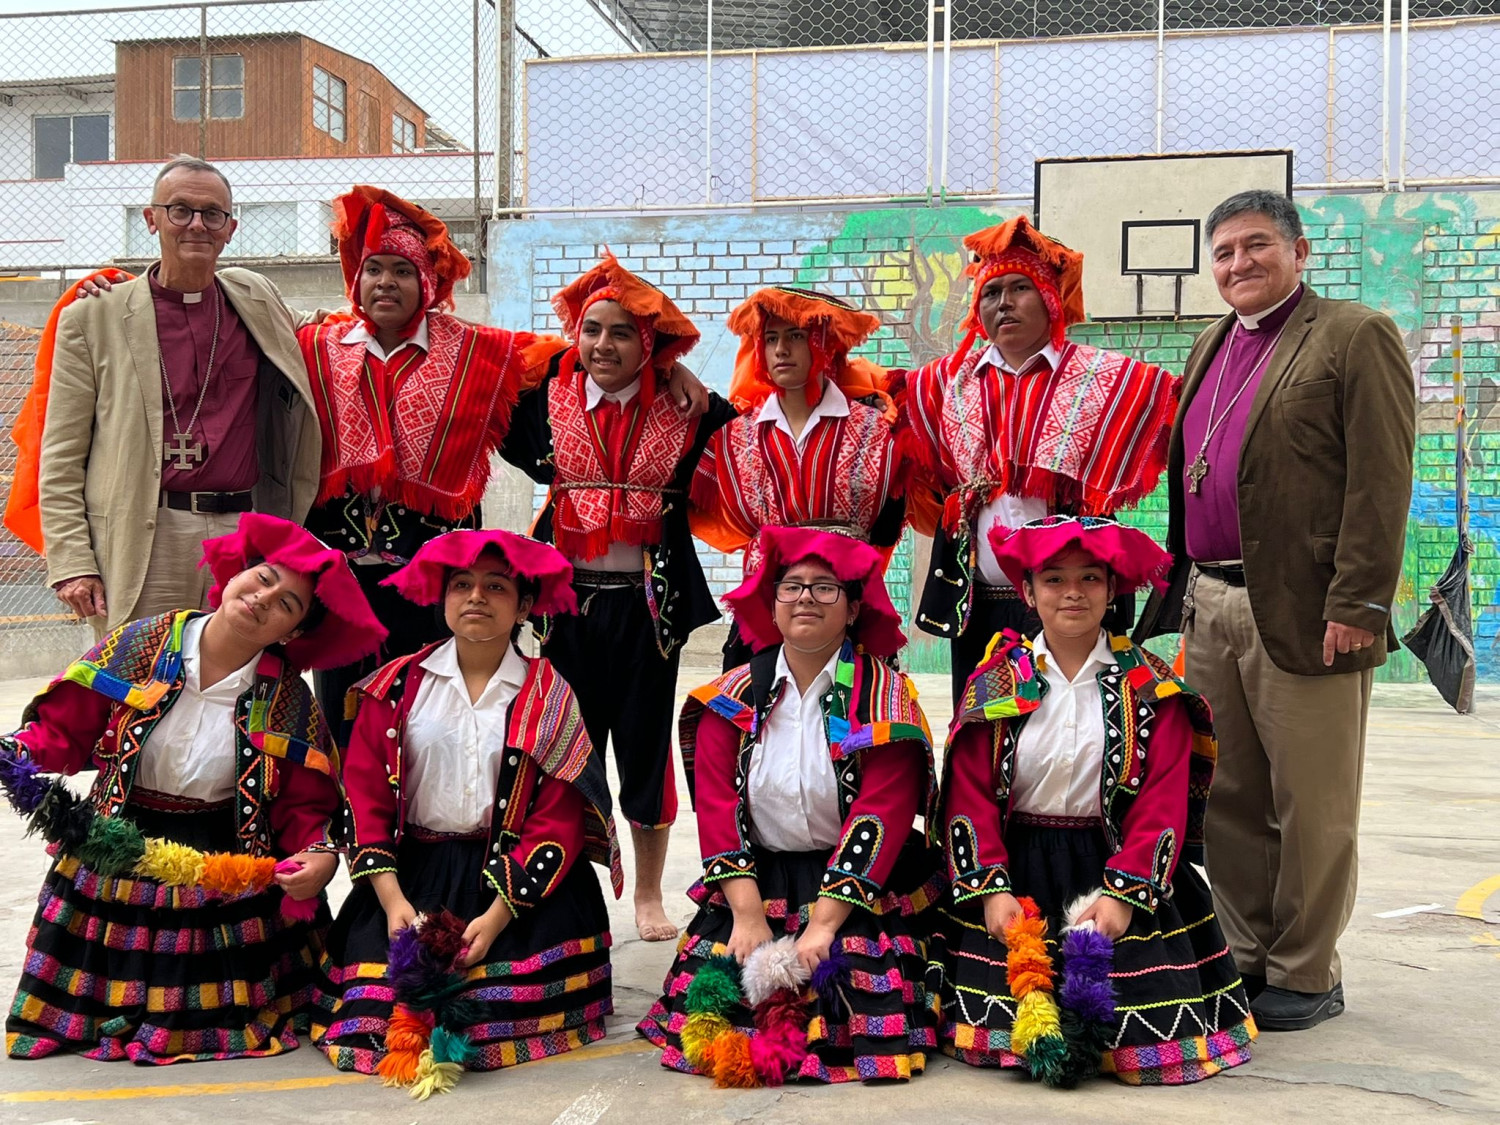 Bishop John & Bishop Jorge with Peruvian dancers